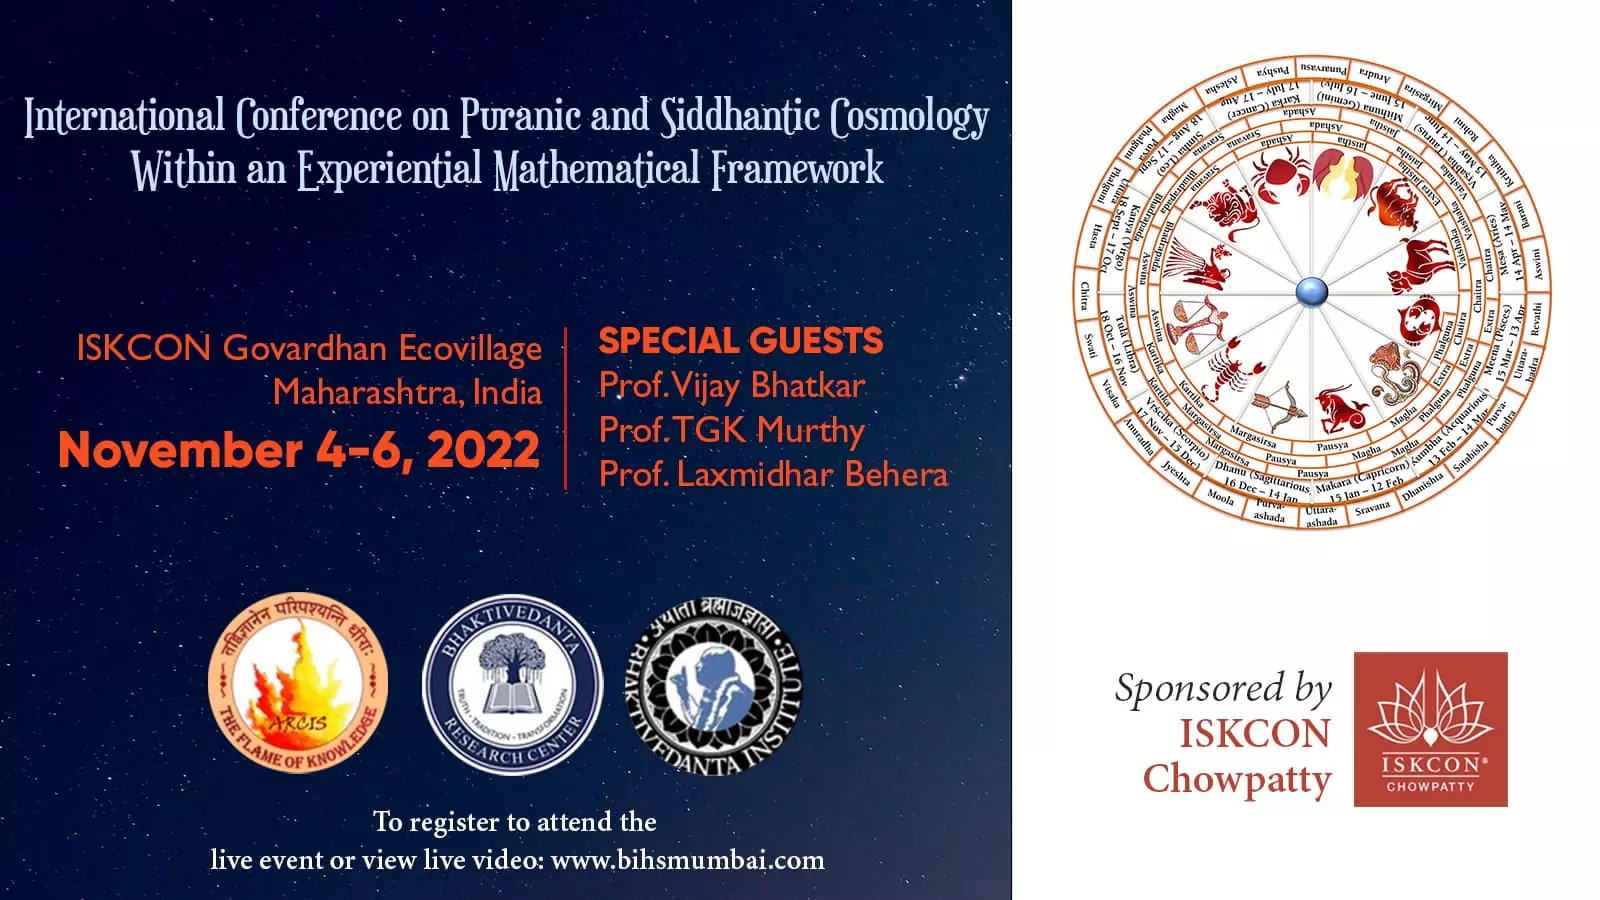 Puranic and Siddhantic Cosmology Conference，哥瓦尔丹生态村，2022 年 11 月 4 日至 6 日